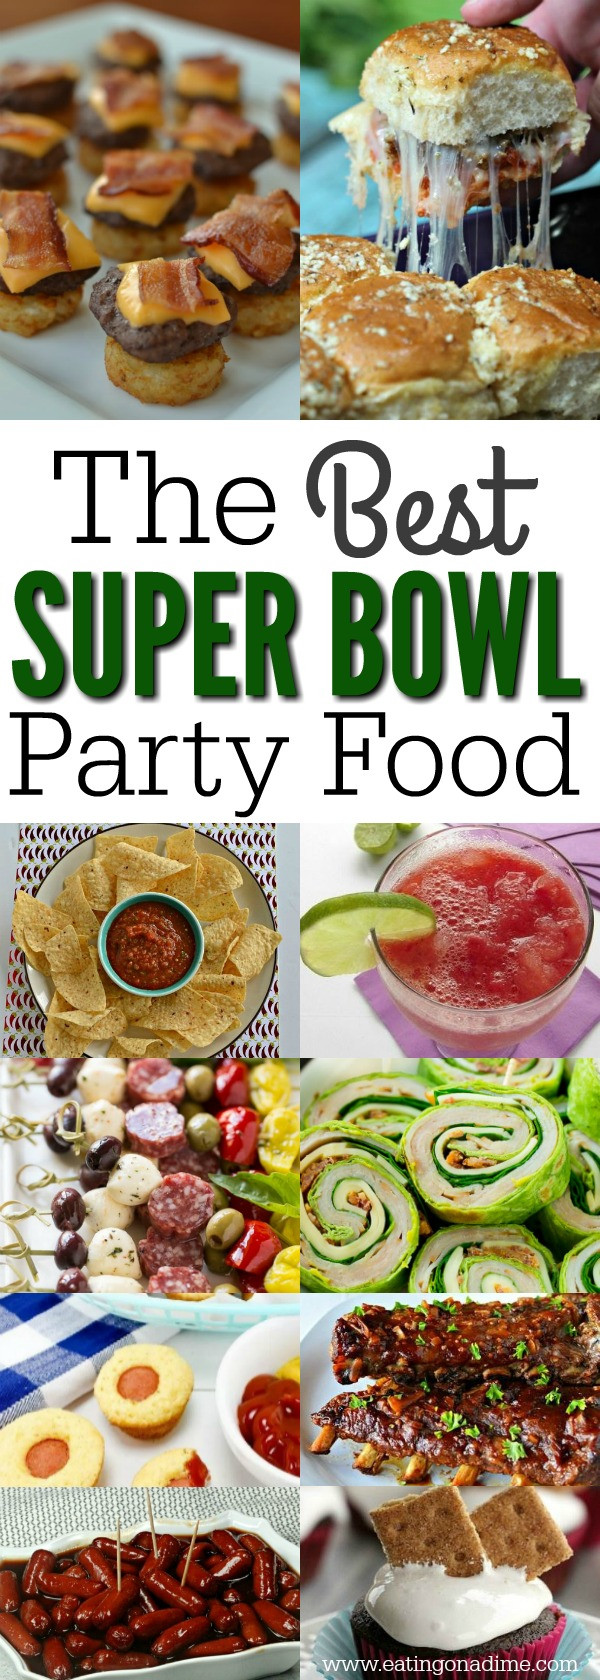 Super Bowl Main Dishes
 Super Bowl Party Food 75 Super Bowl Recipes Everyone